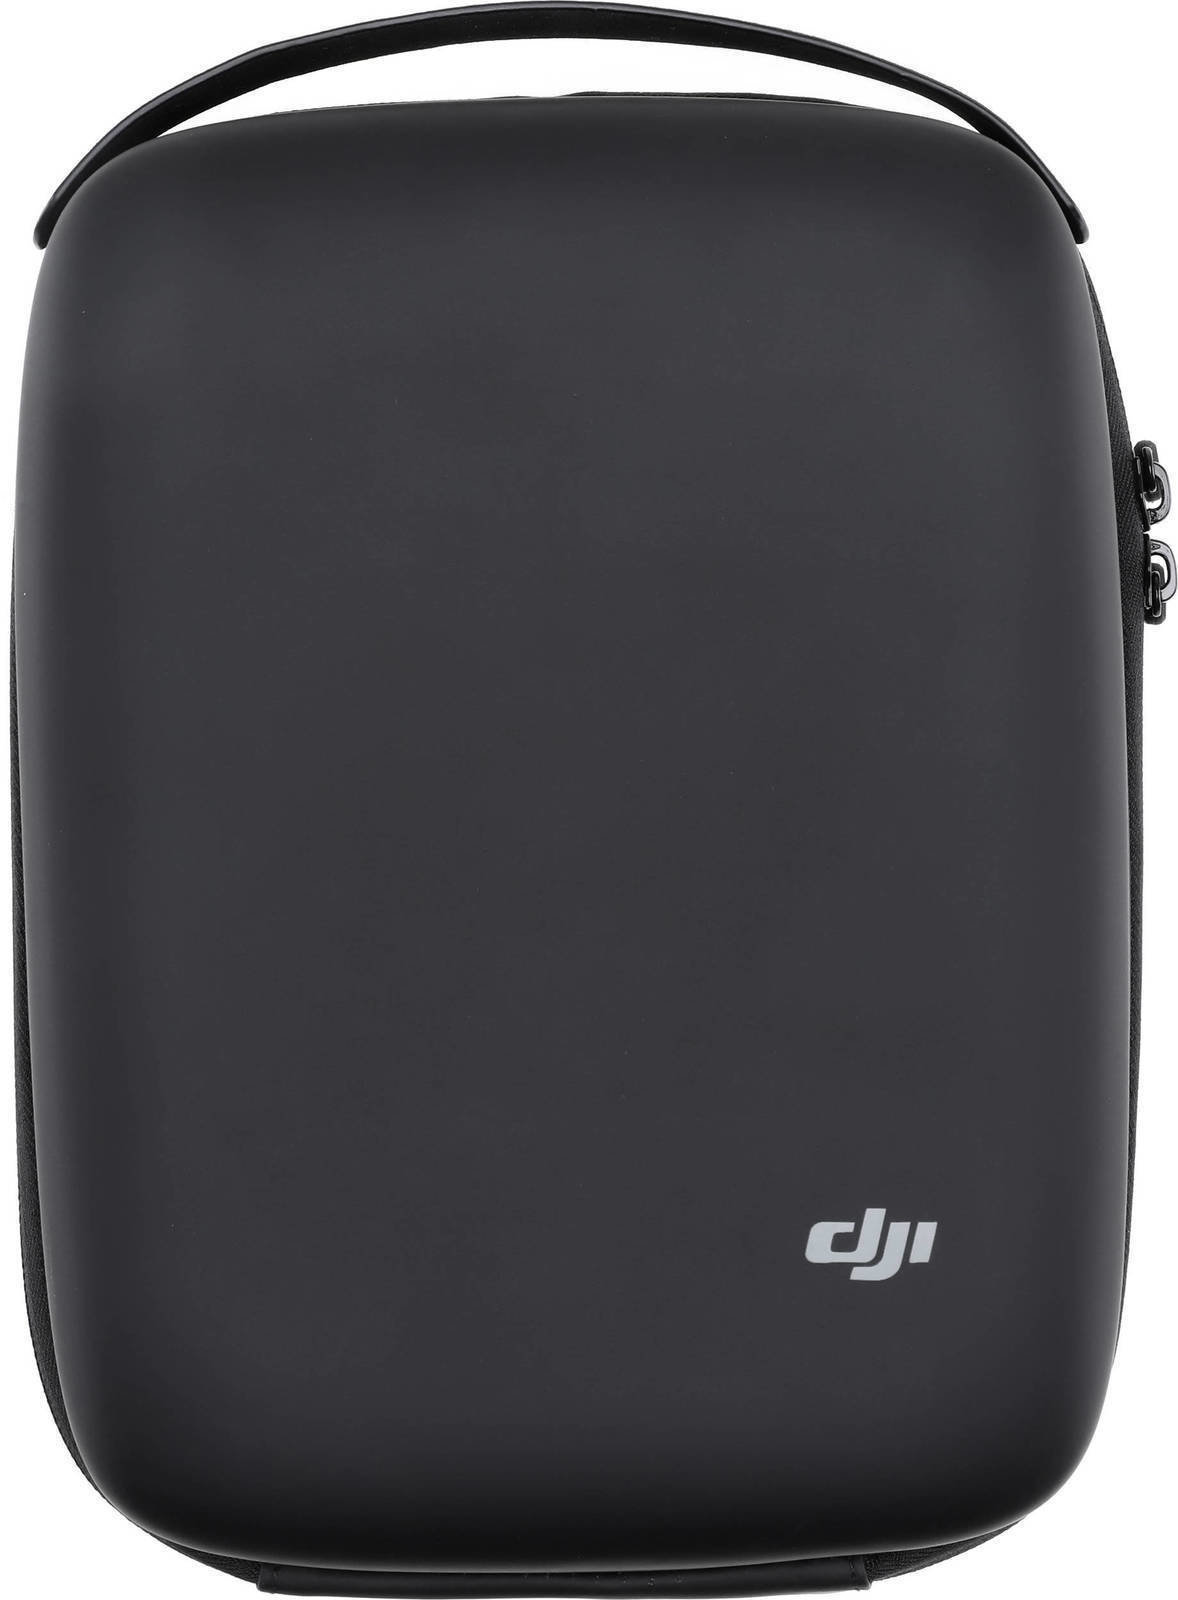 Adaptador para drones DJI Spark - Portable Charging Station Carrying Bag - DJIS0200-09